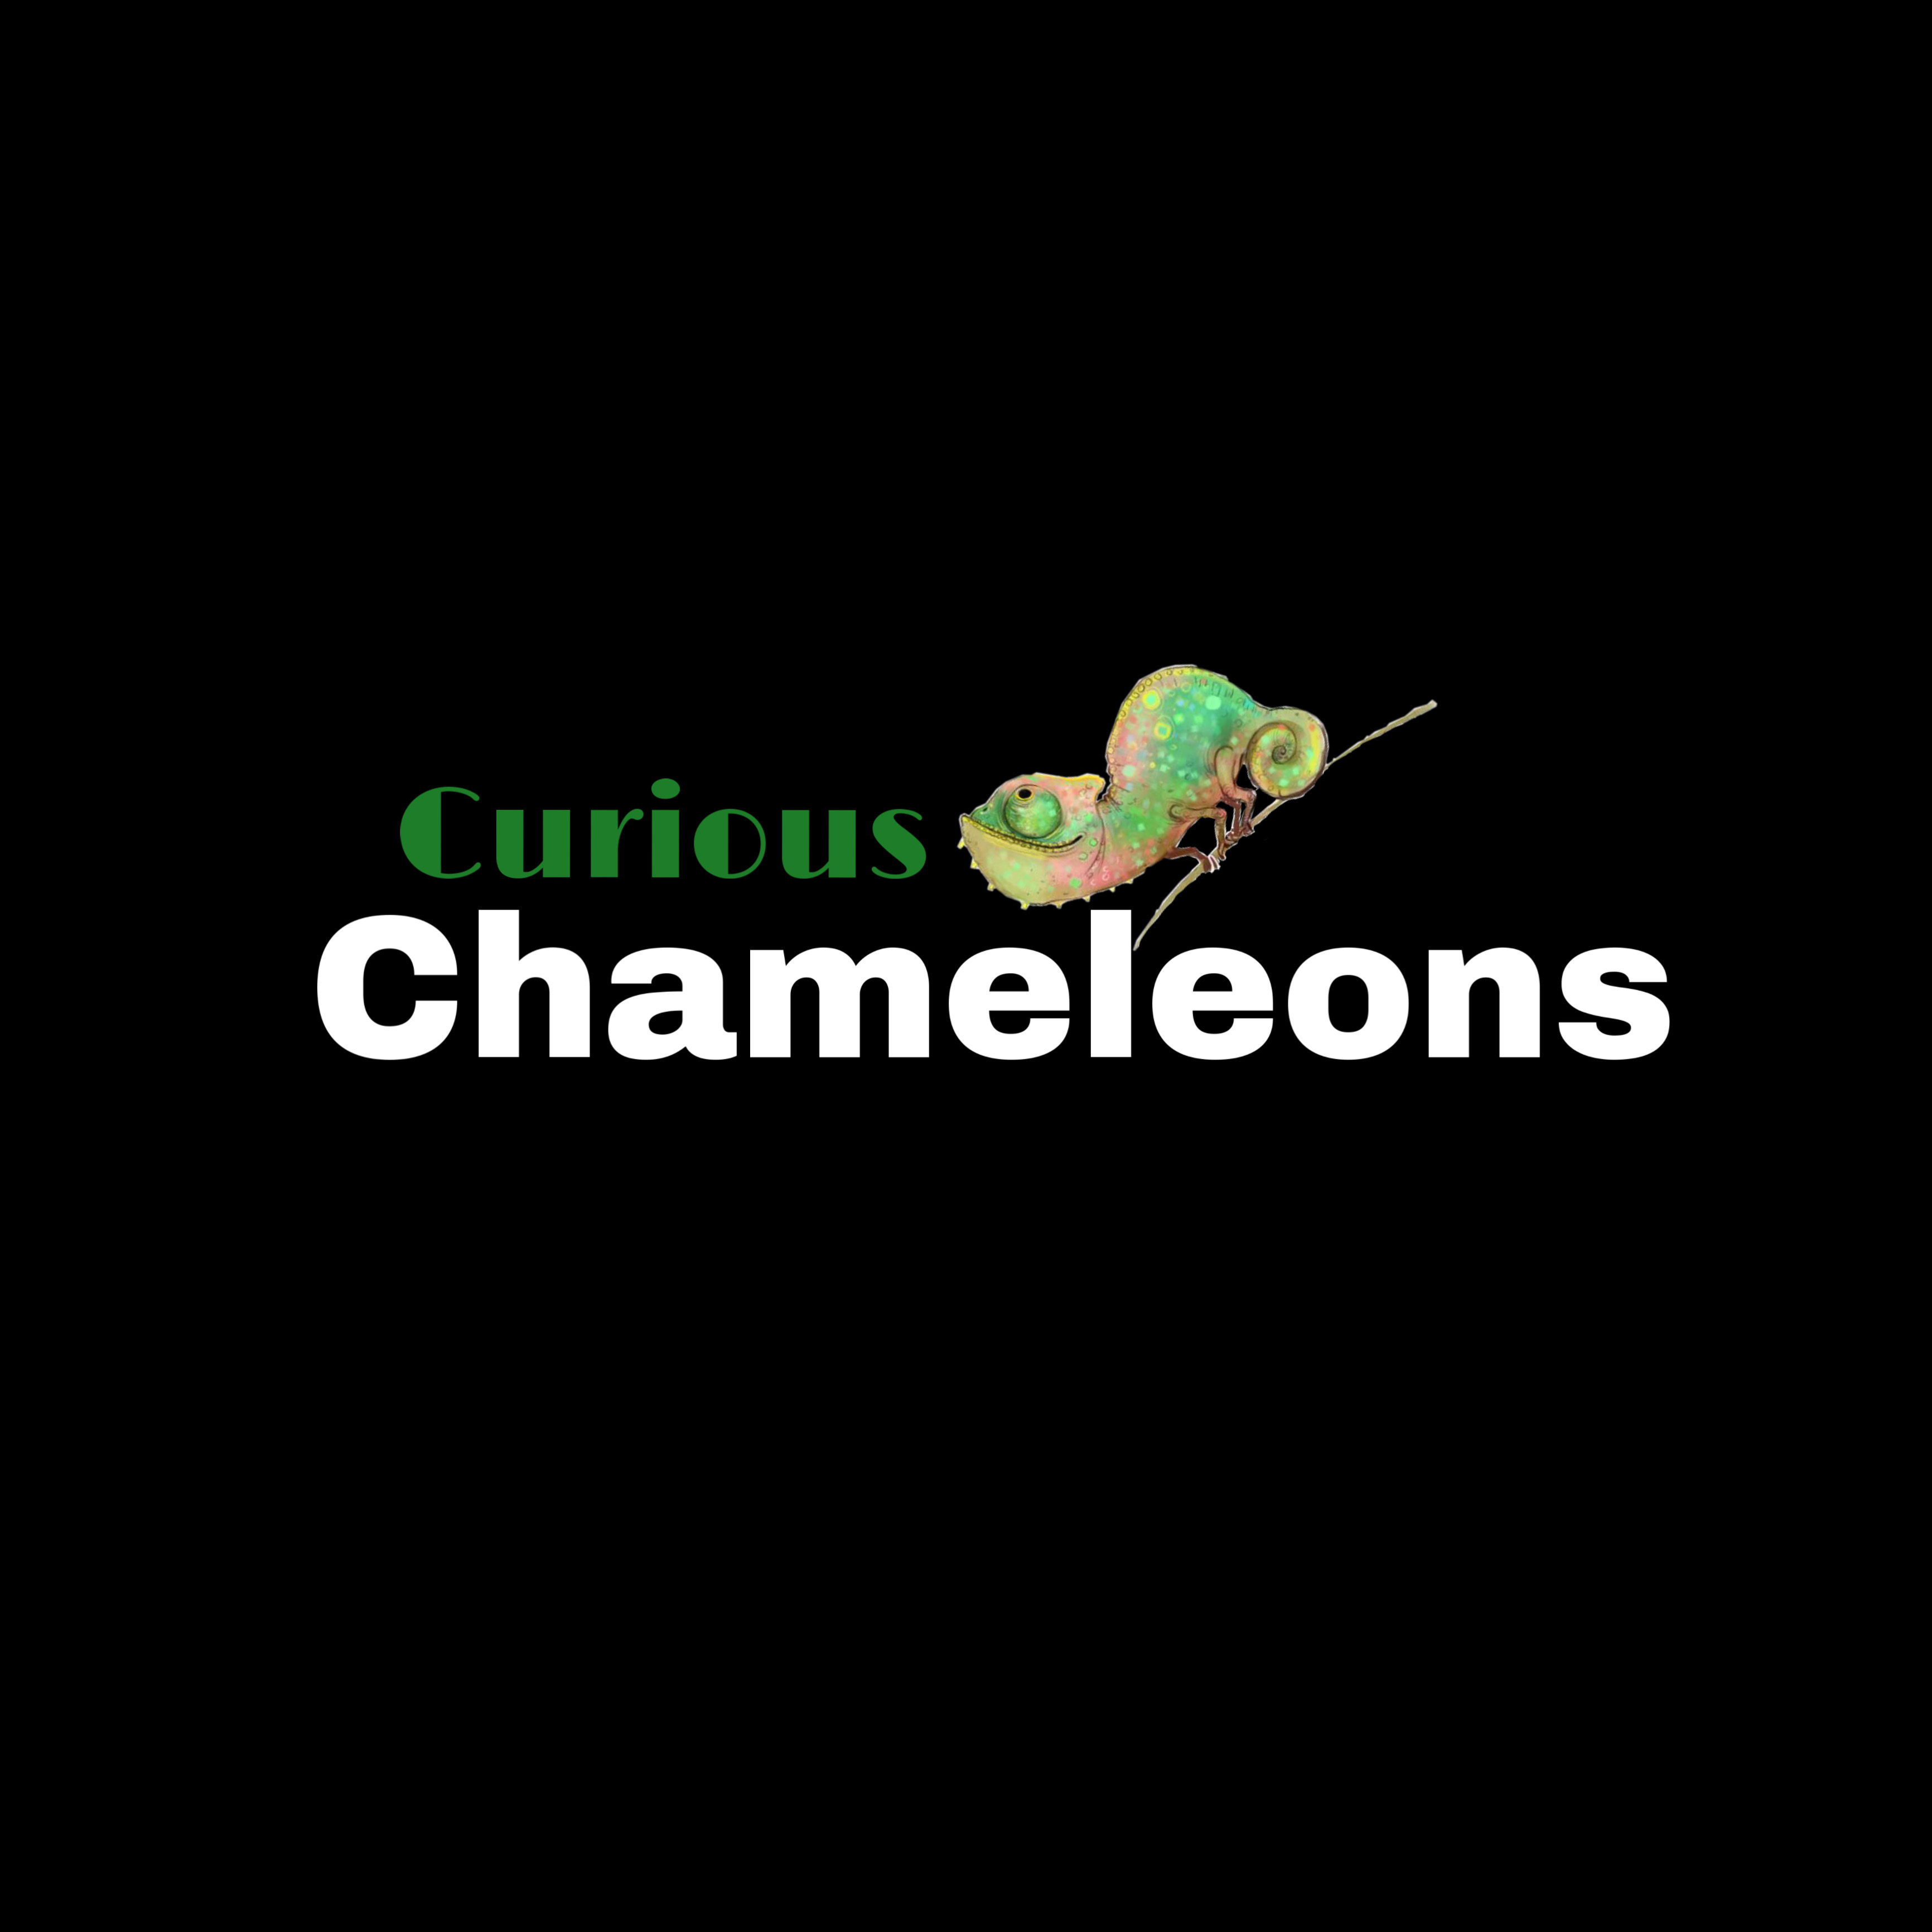 Curious Chameleons